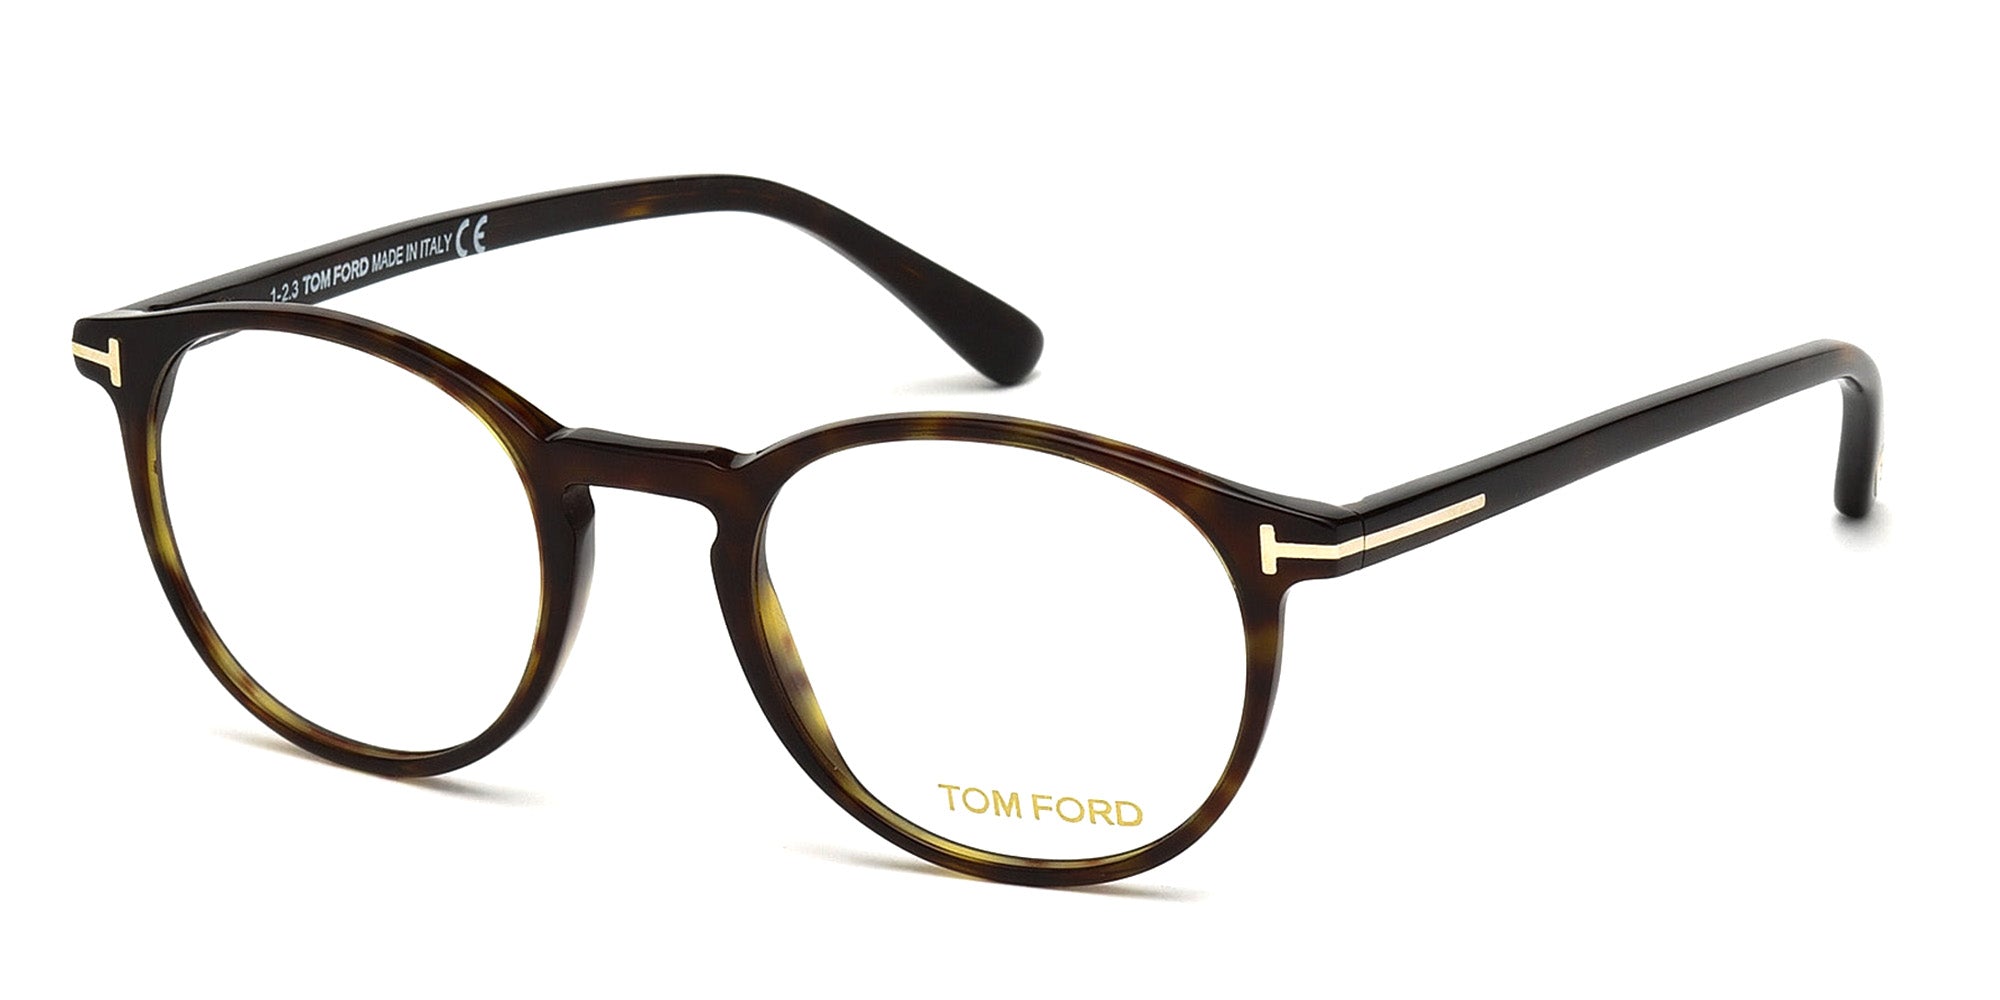 Tom Ford TF5294 Round Glasses | Fashion Eyewear